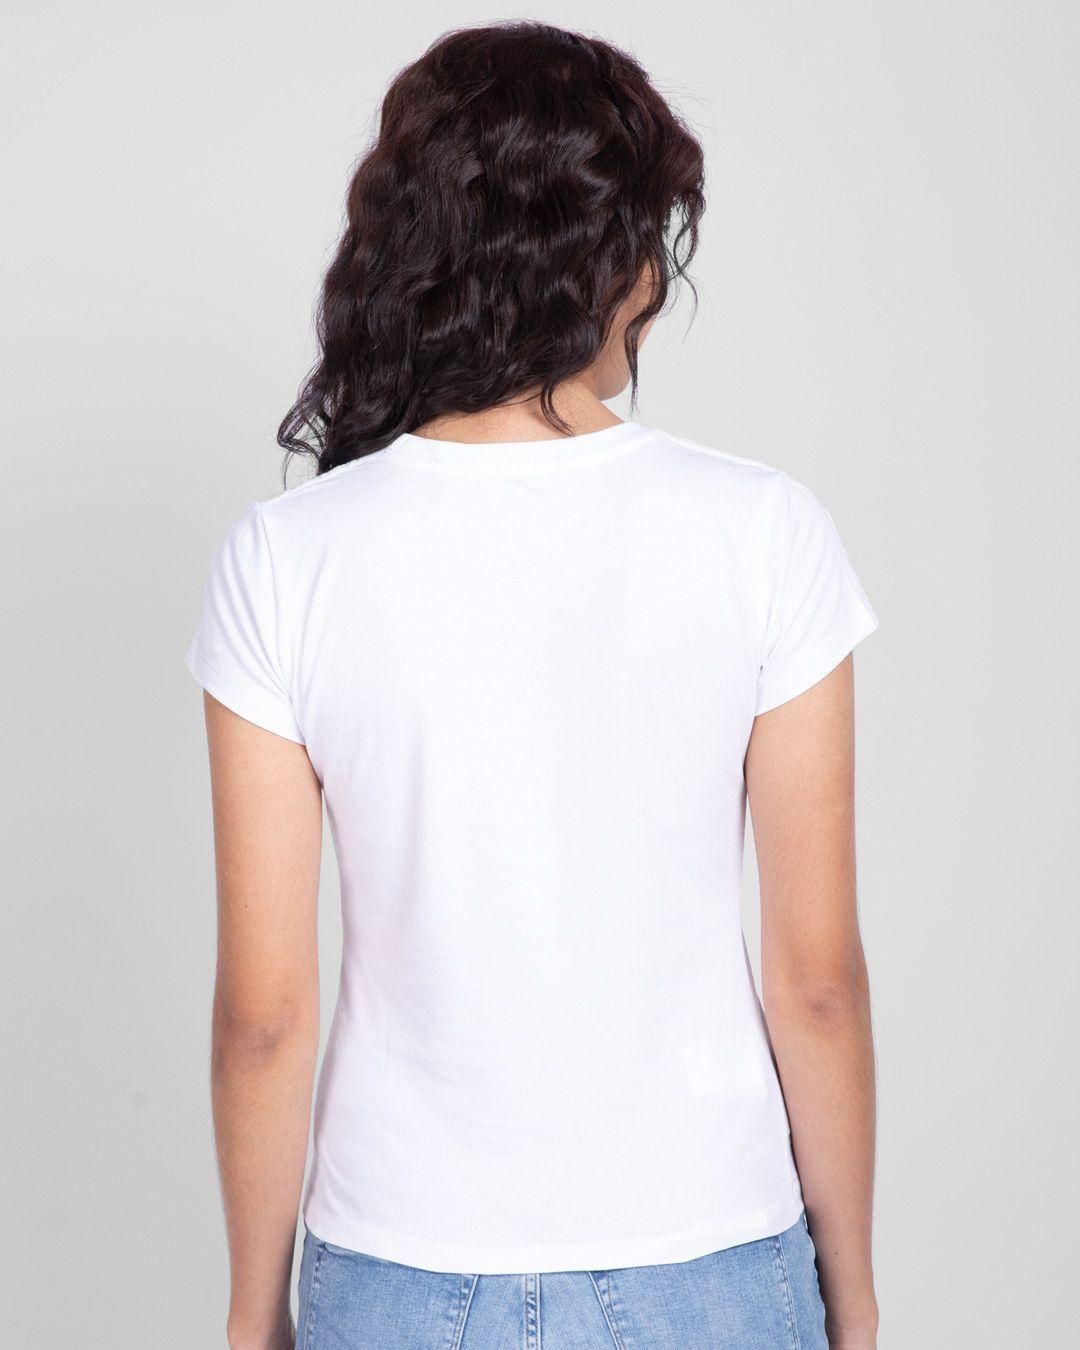 Women's Cotton Blend Graphic Print T-Shirt Buy 1 Get 1 Free